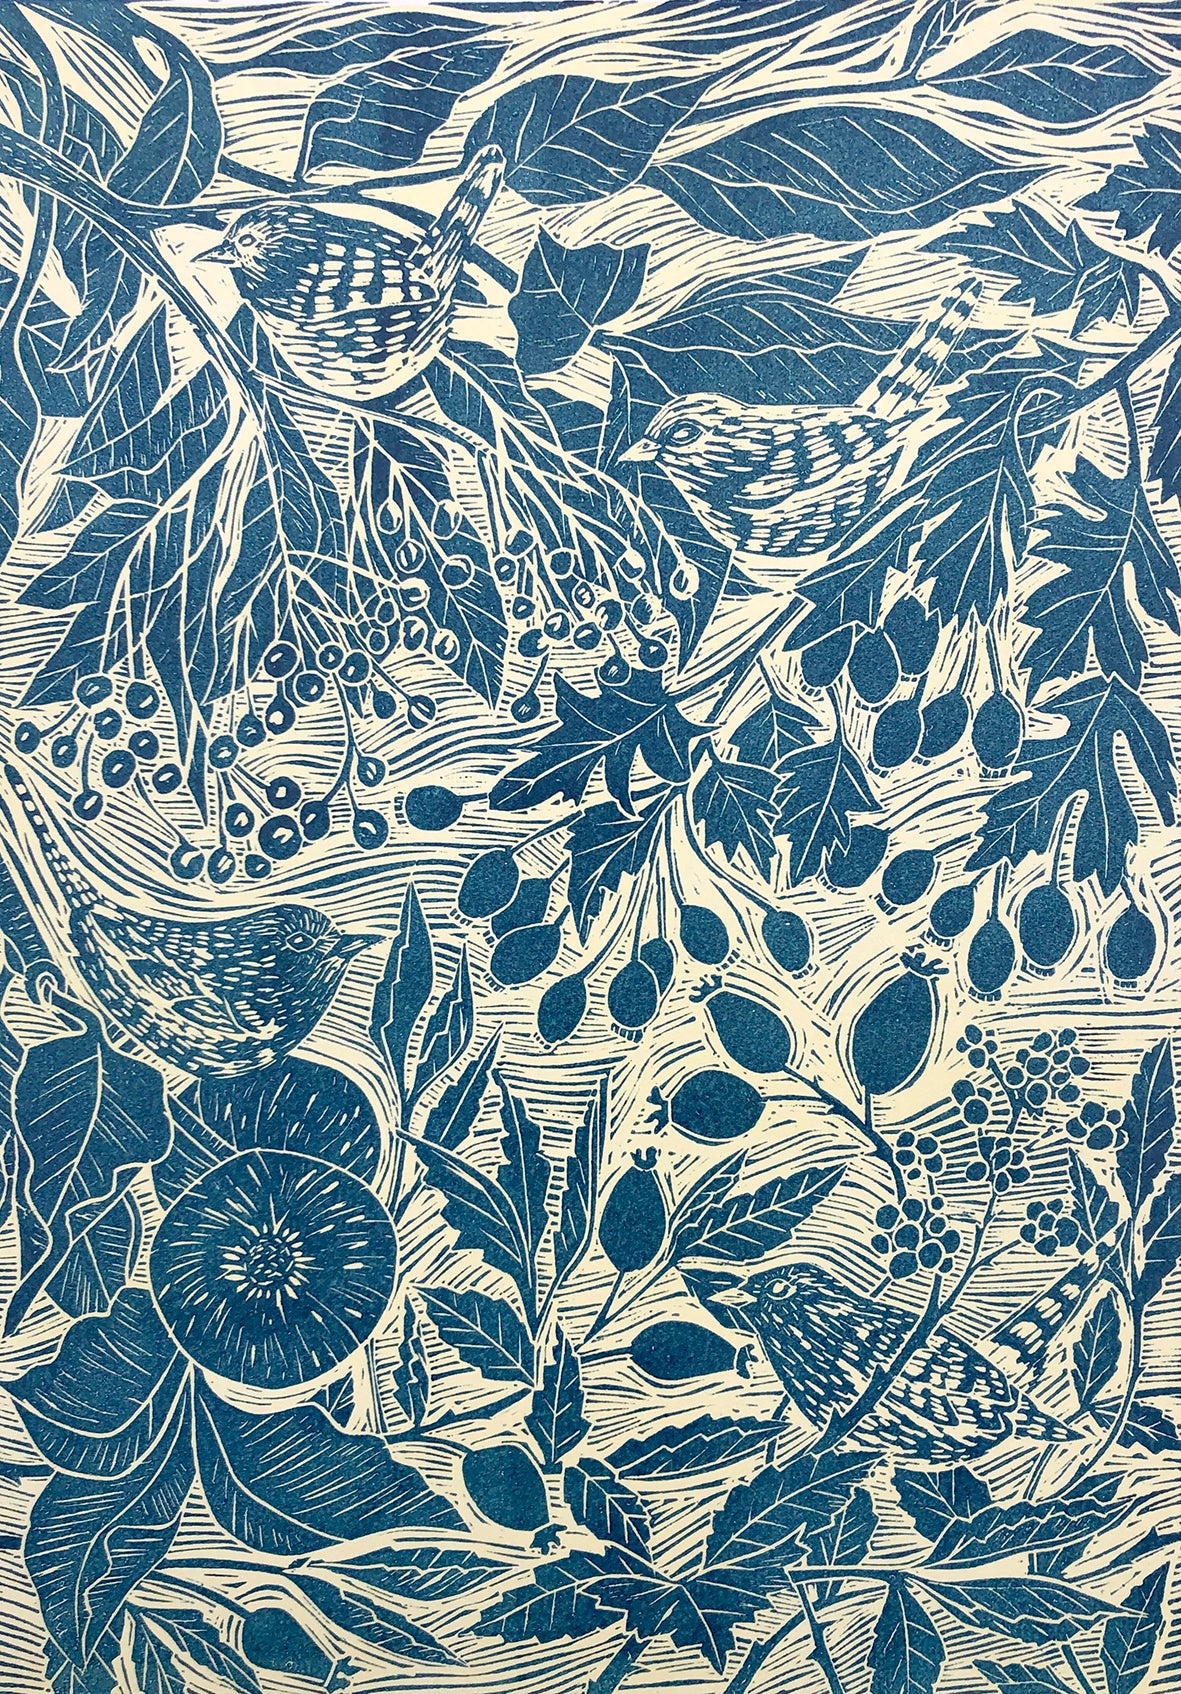 Blue lino cut print by Cornish artist Claire Armitage